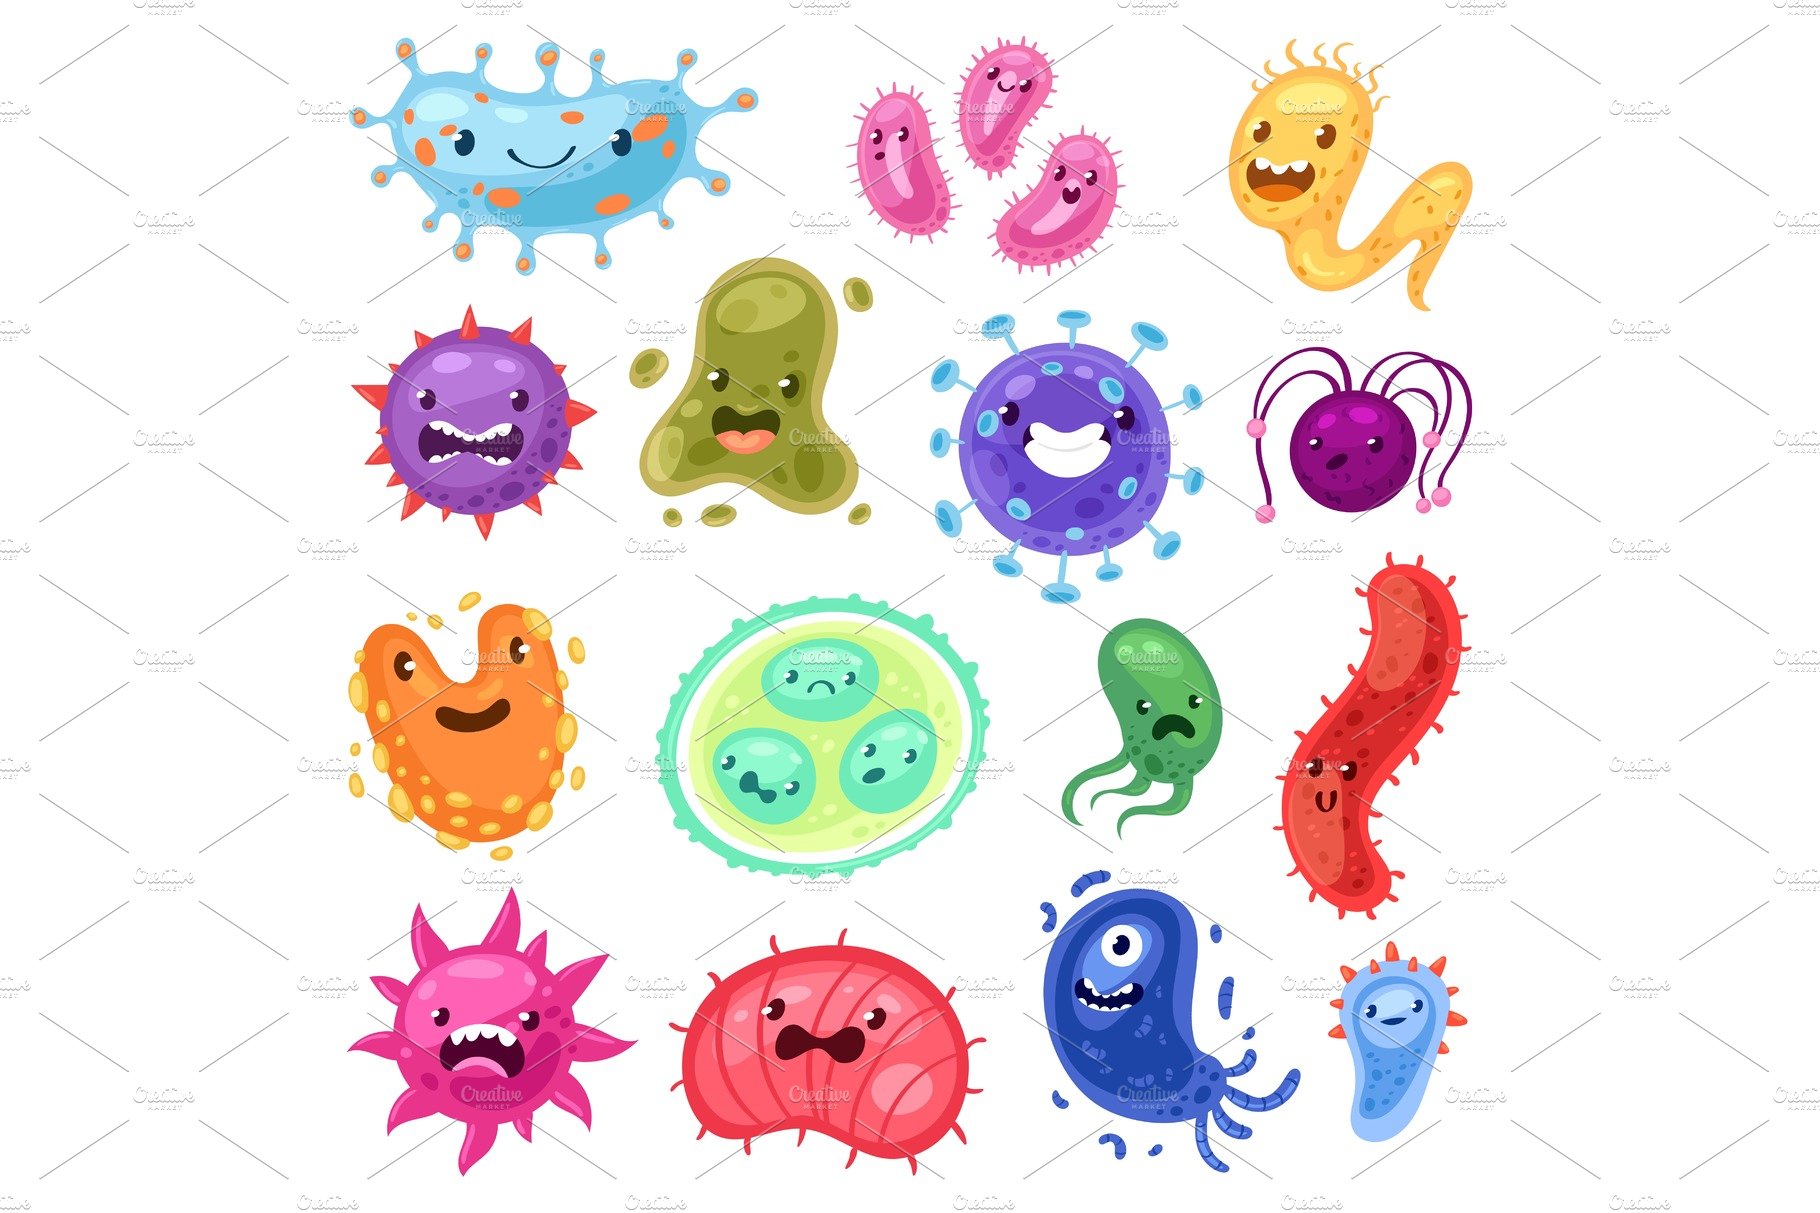 Viruses vector cartoon bacteria cover image.